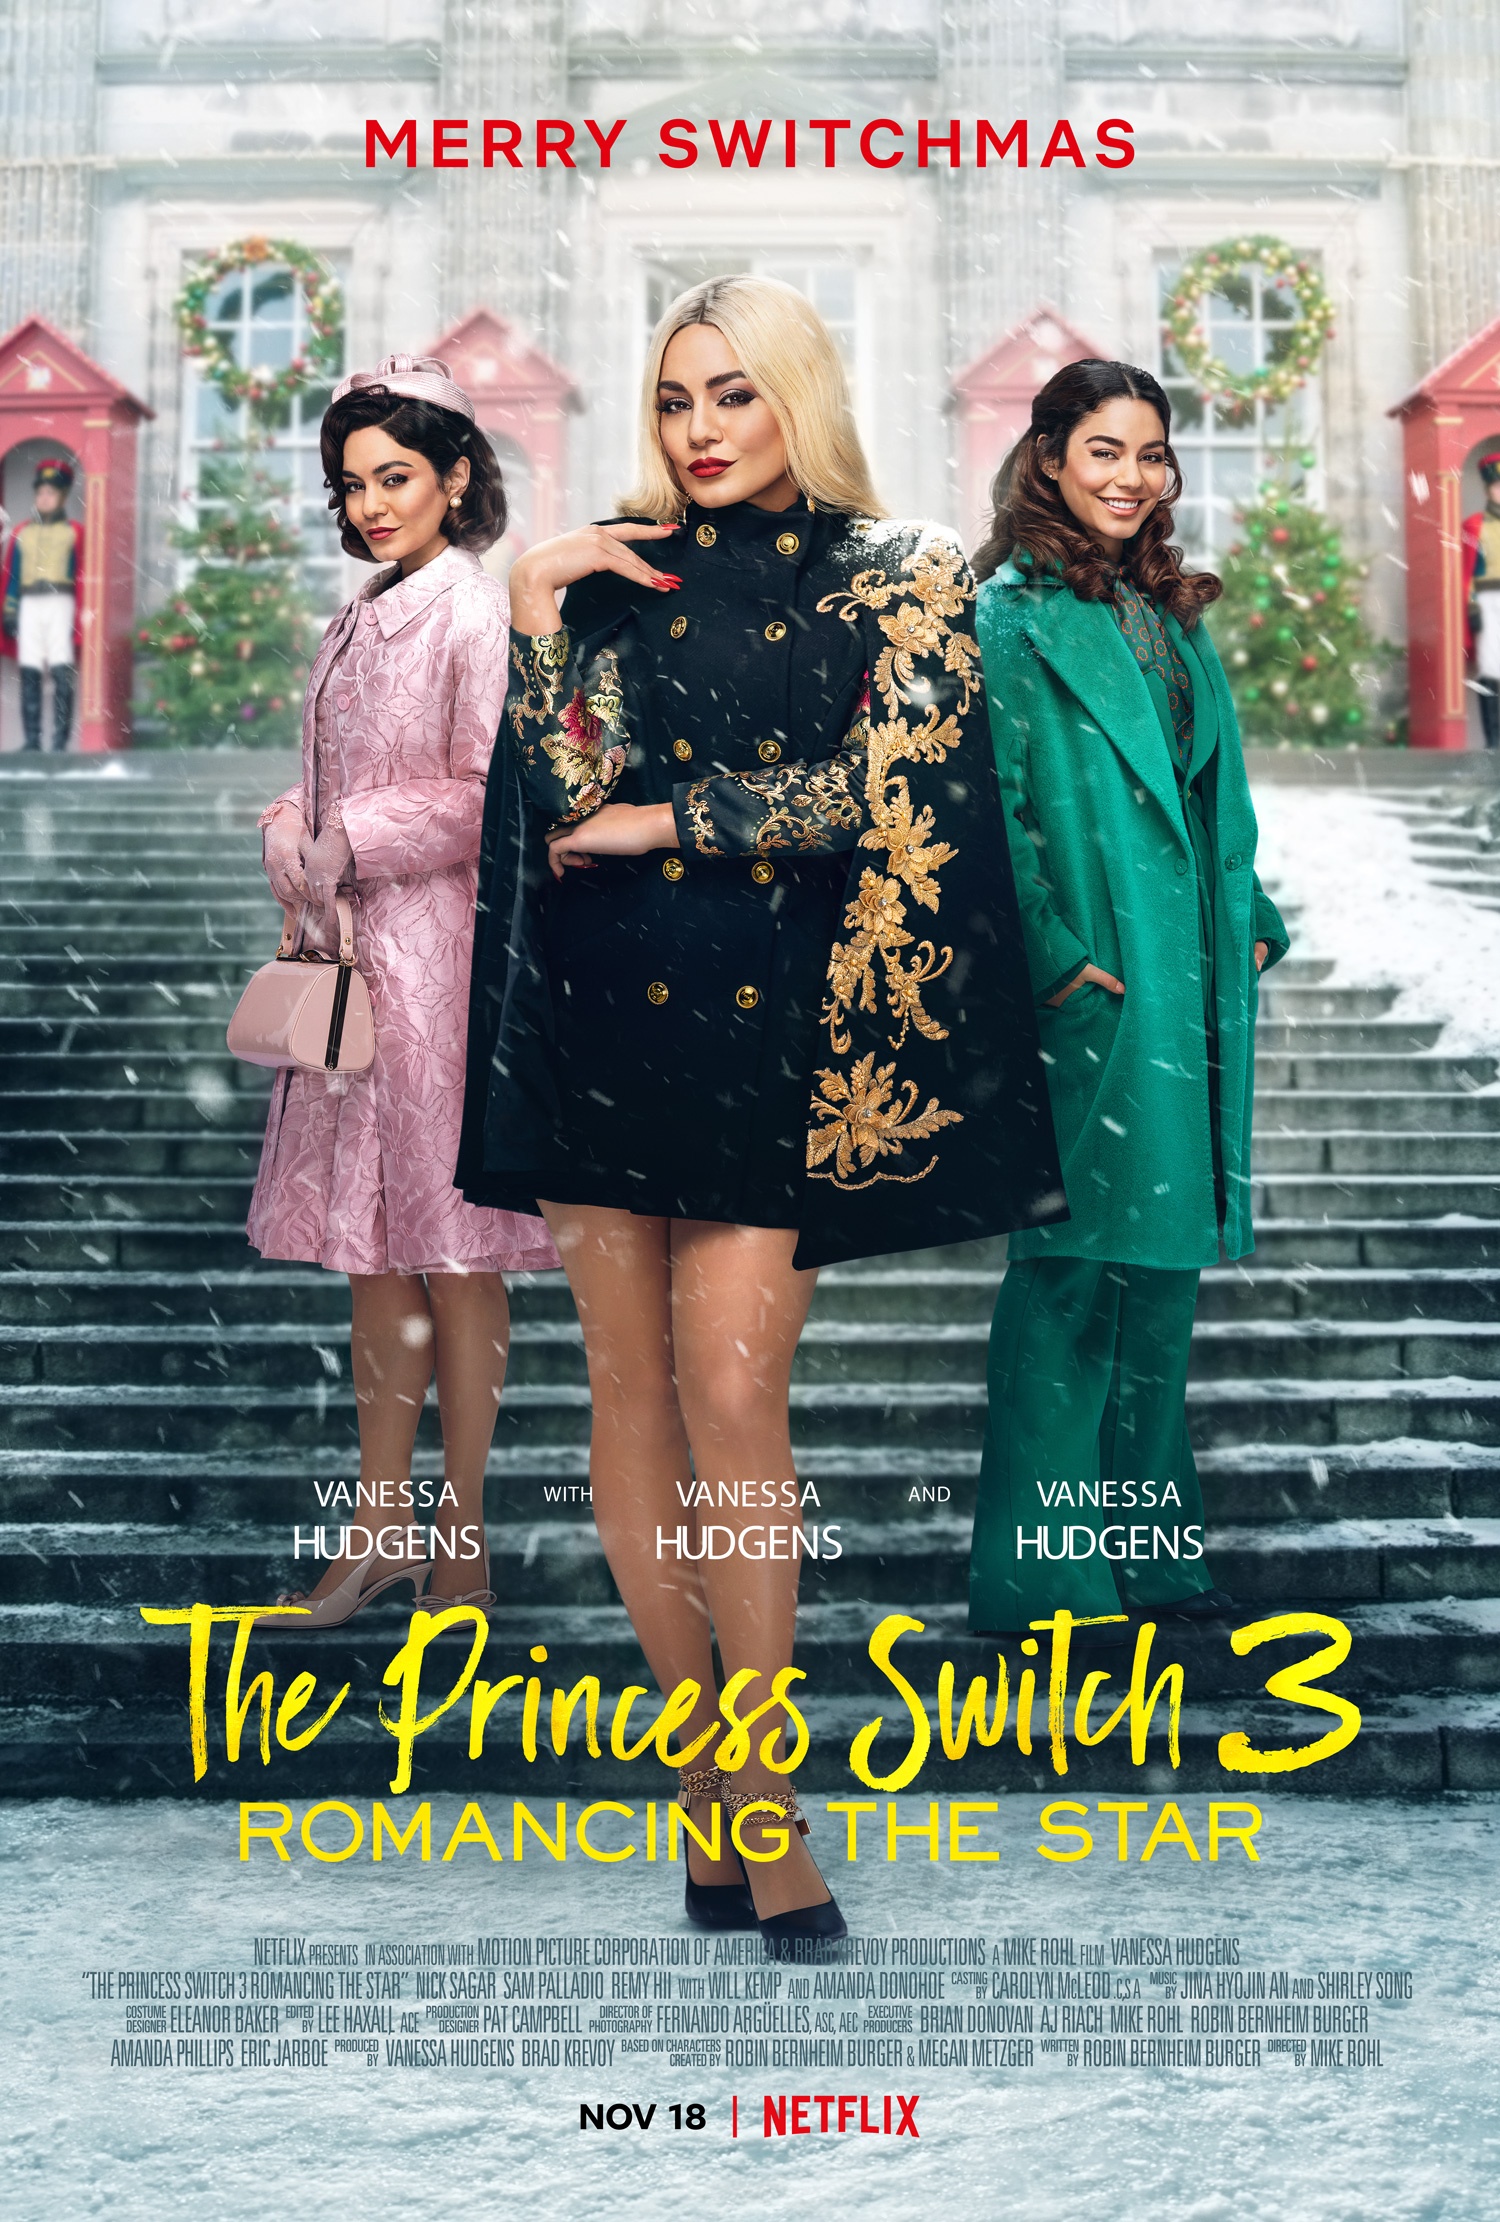 New Movie: ‘The Princess Switch 3: Romancing the Star’ Starring Vanessa Hudgens